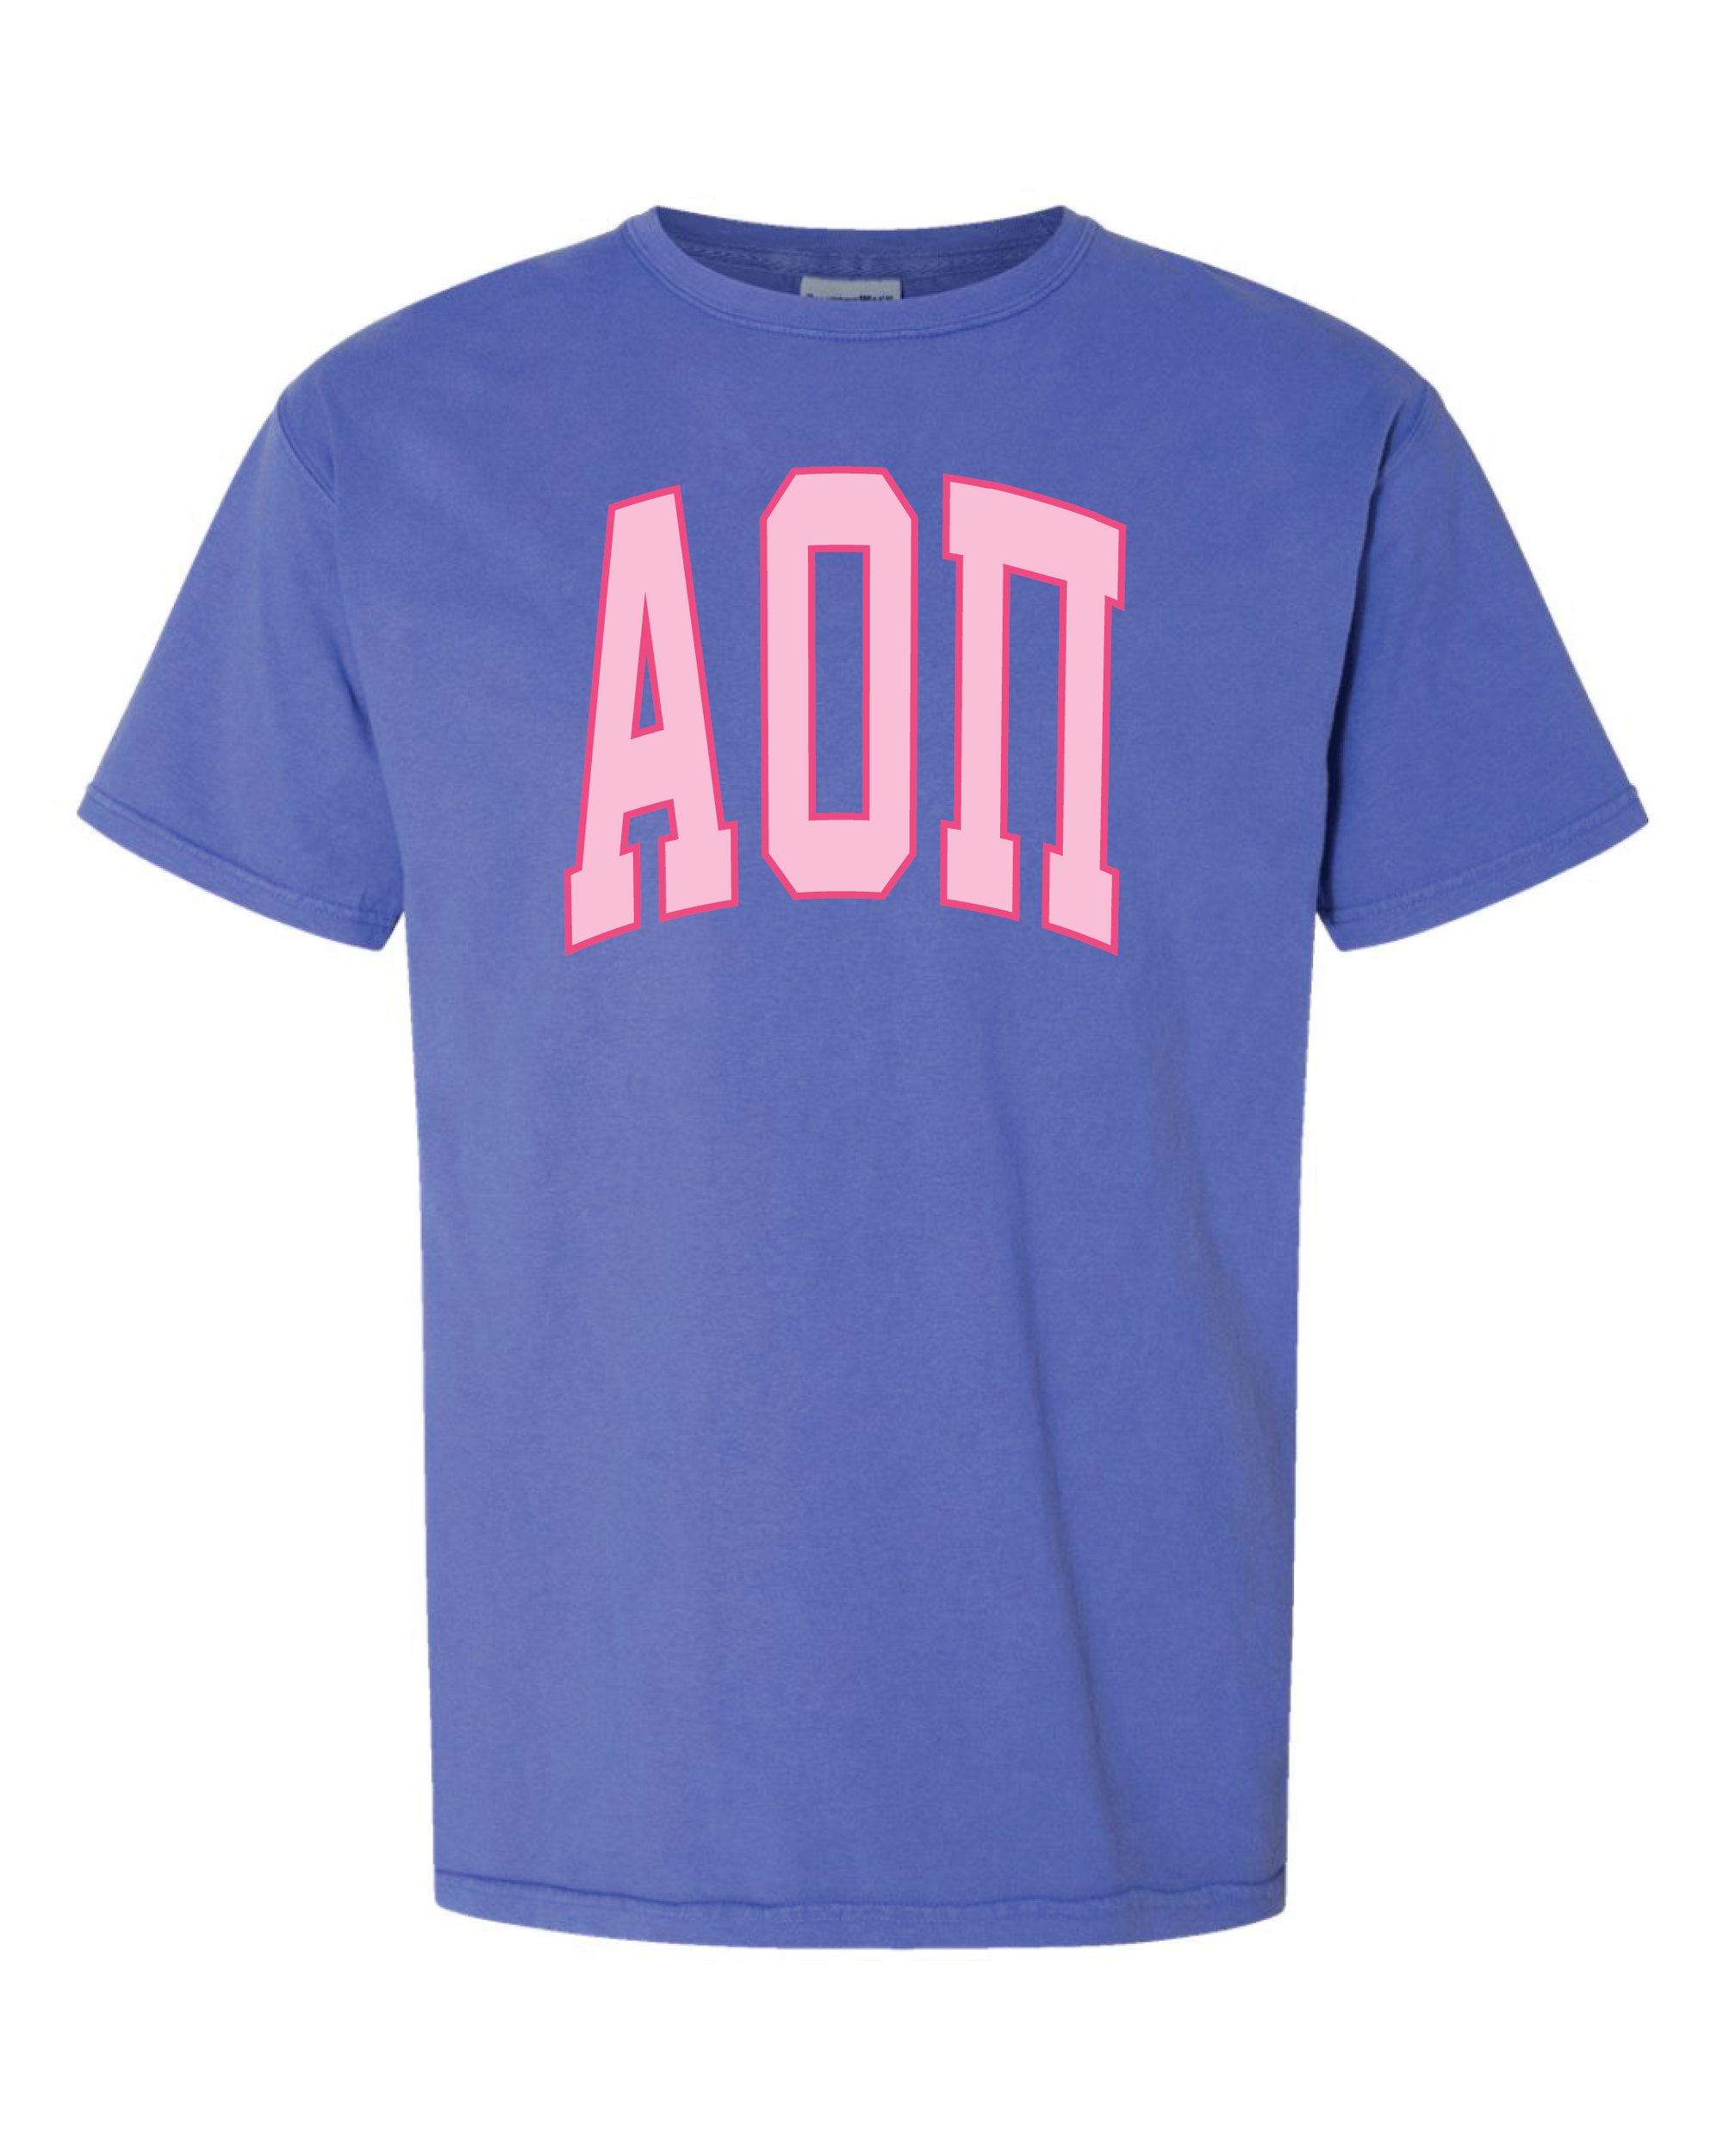 AOPi Varsity Letters Tshirt